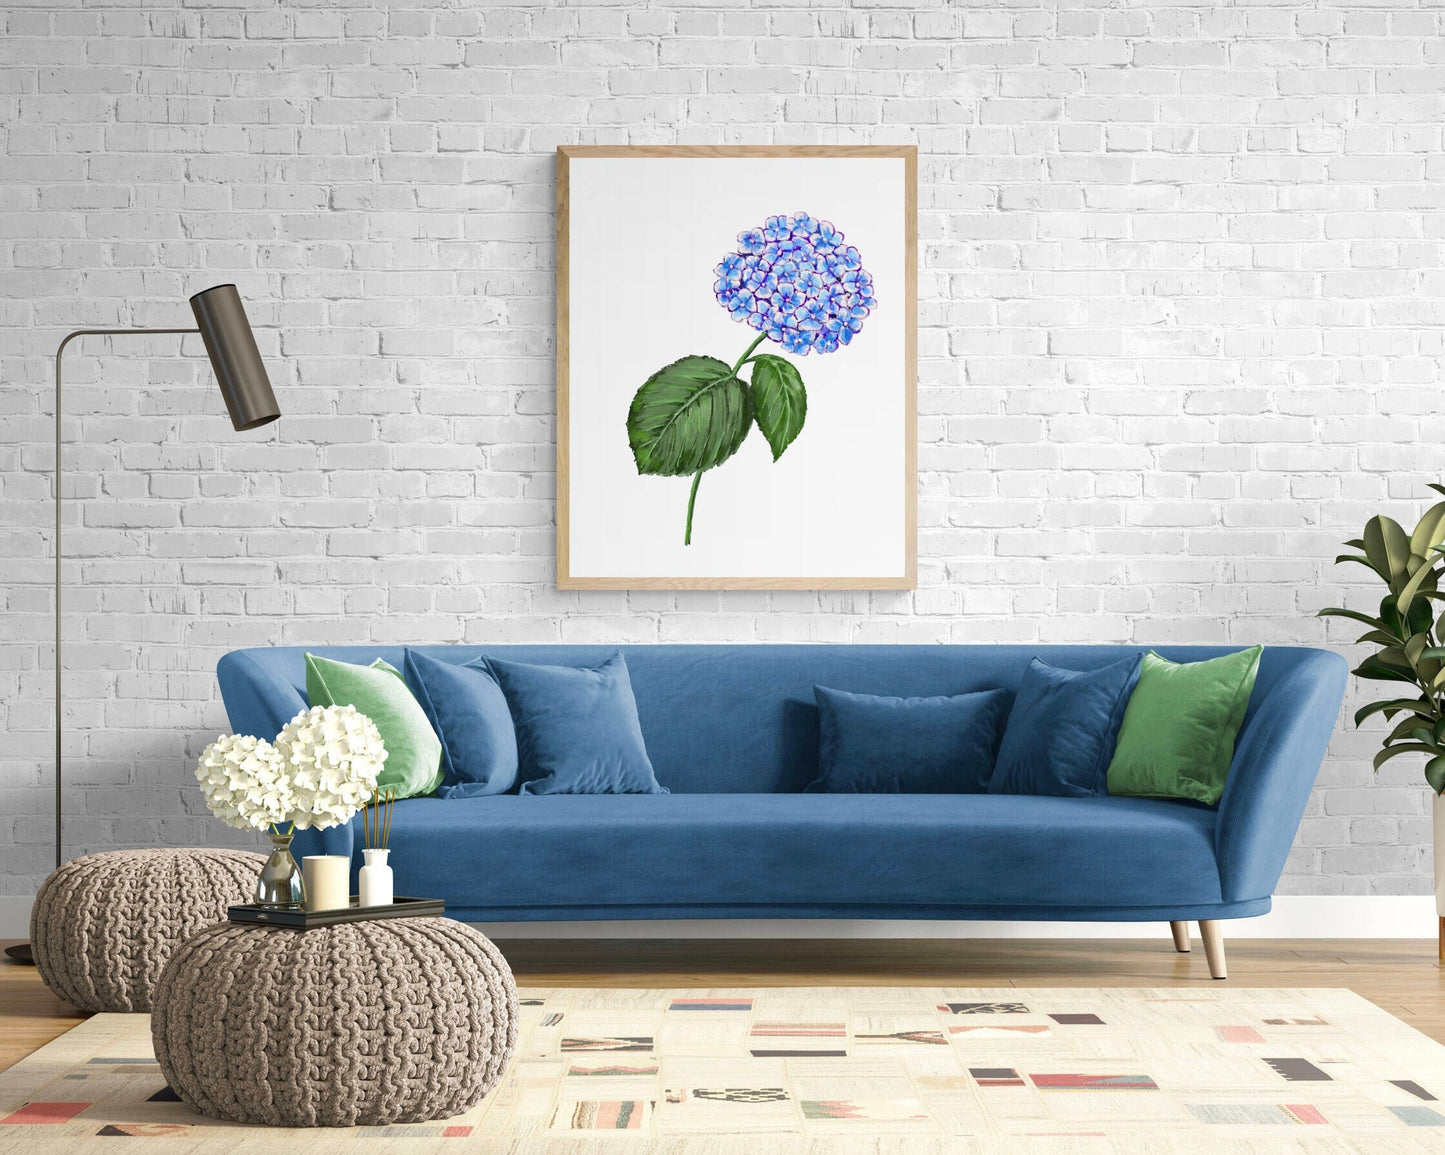 Hydrangea Art Print, Flower Wall Art, Kitchen Wall Hanging, Dining Room Decor, Blue Flower Painting Illustration, Farmhouse Wall Decor